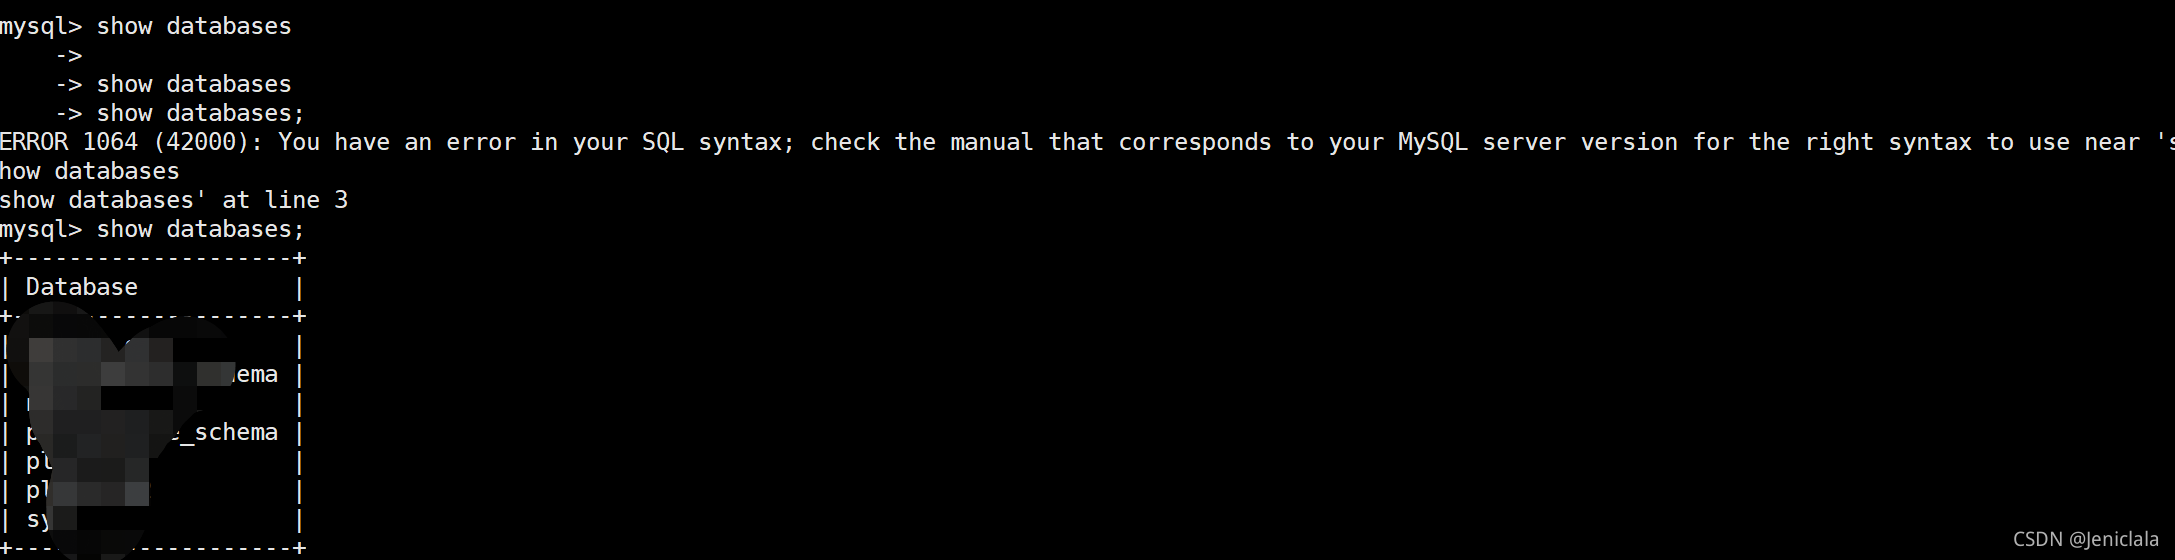 mysql命令行操作报错：ERROR 1064 (42000): You have an error in your SQL syntax； check the manual